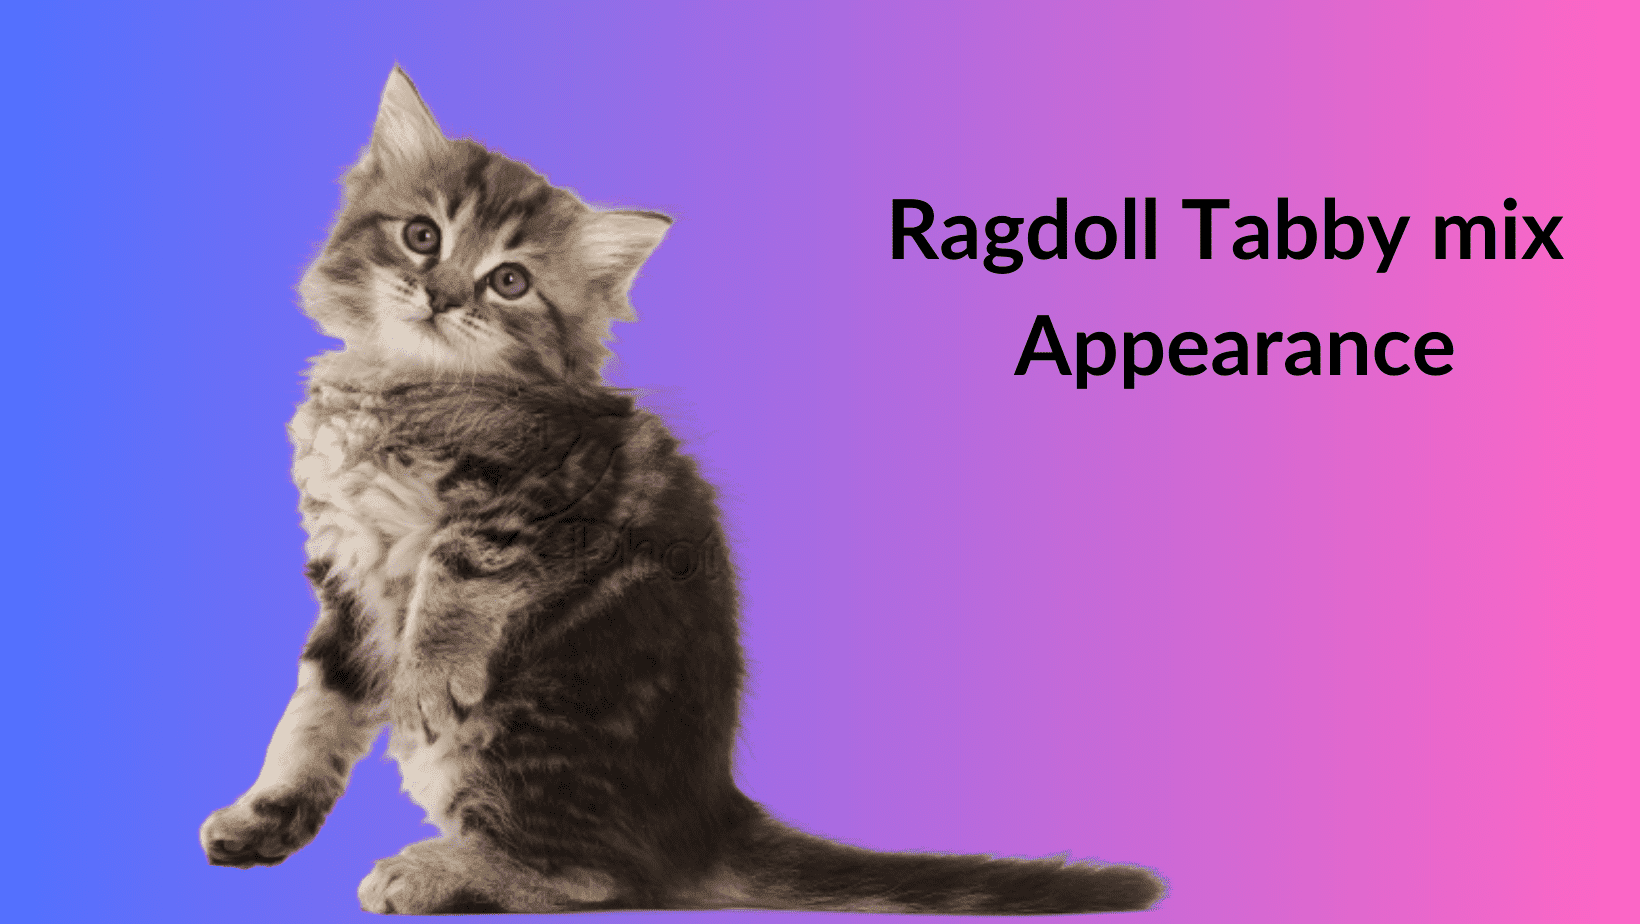 Ragdoll tabby cat mix - Traits, personality you need to know before buying  - RagdollGuru